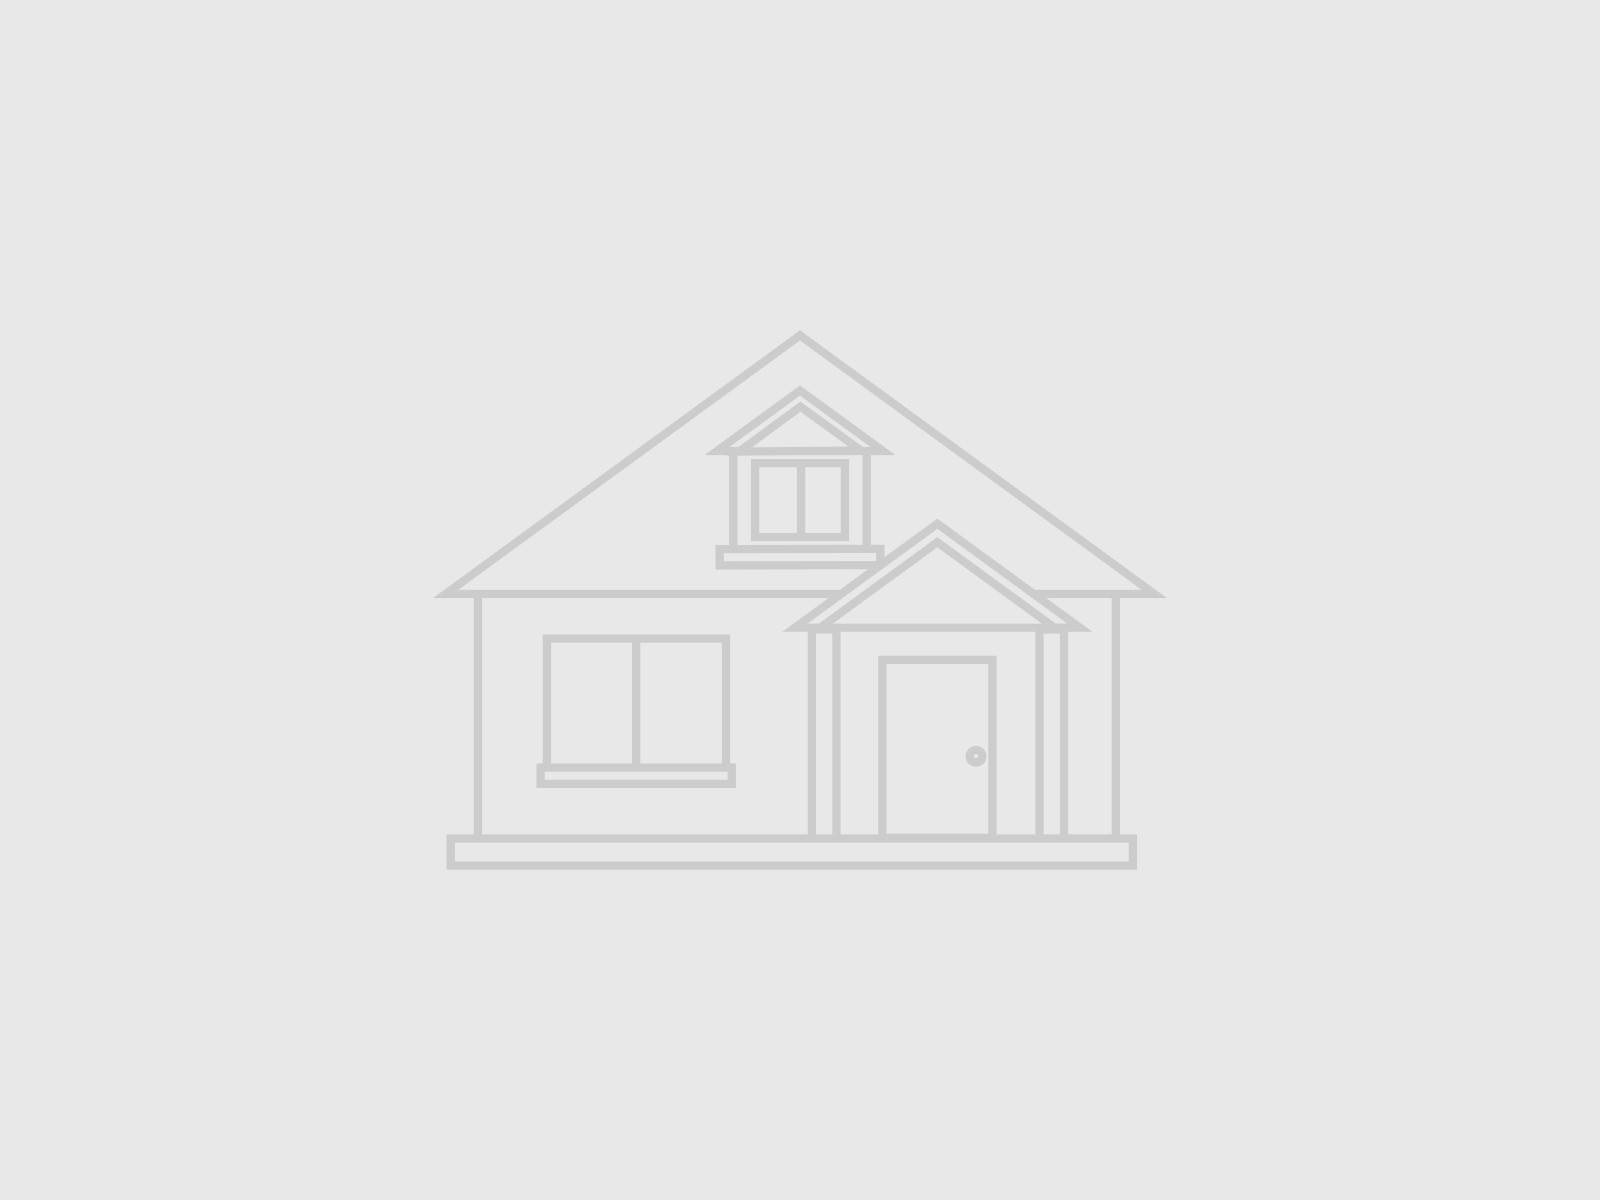 Single Family Homes for Sale at 593 2660 593 2660 Lehi, Utah 84043 United States